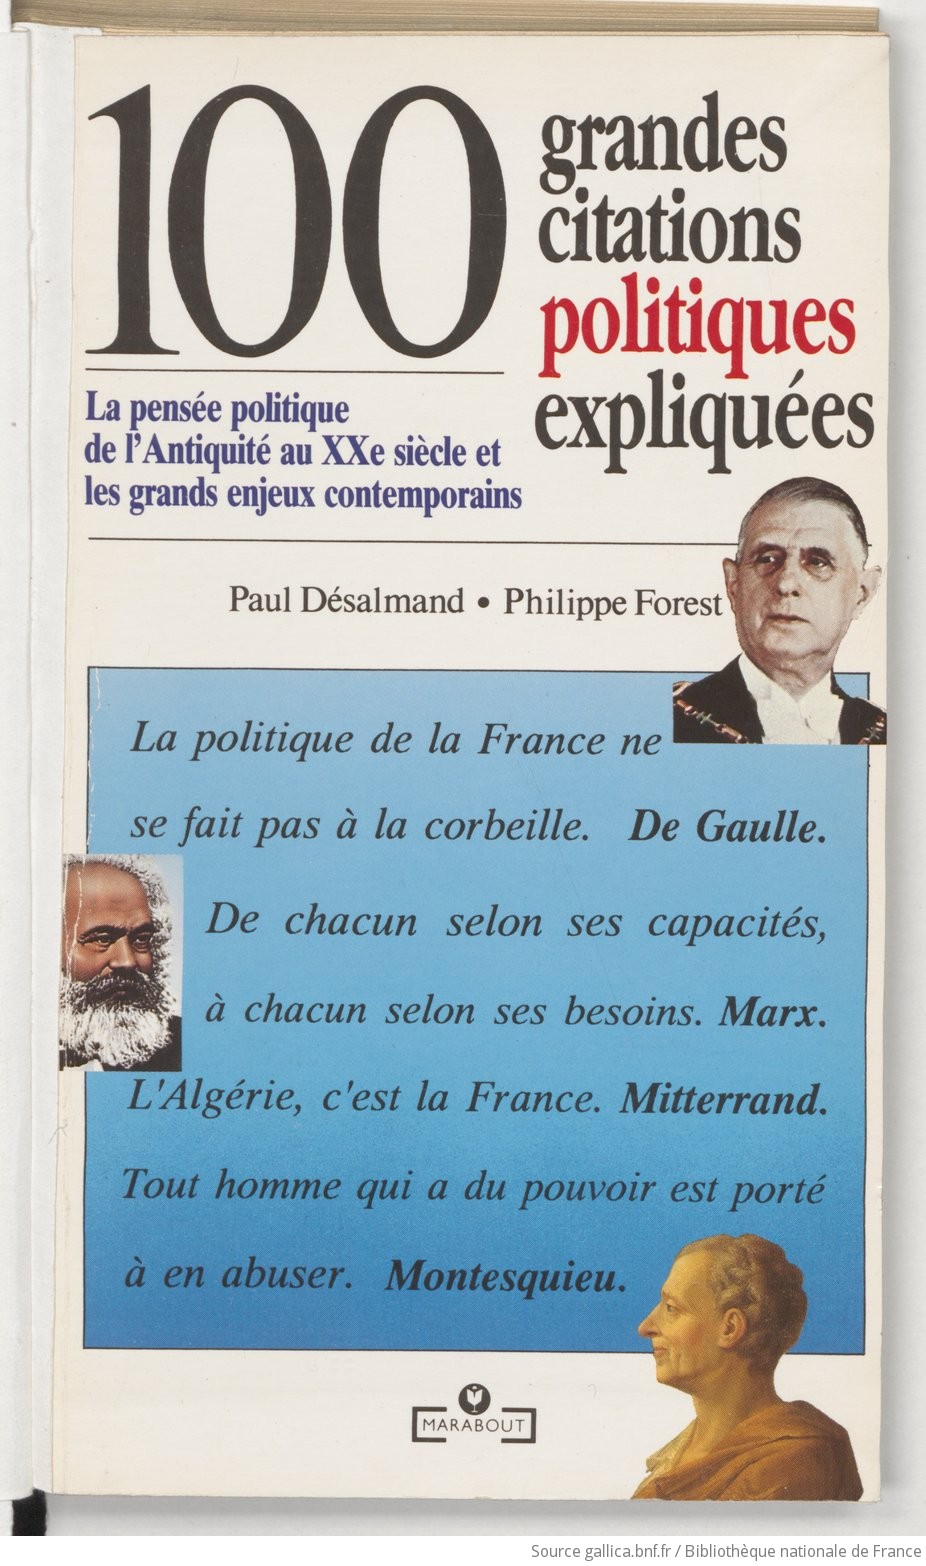 100 Grandes Citations Politiques Expliquees Paul Desalmand Philippe Forest Gallica